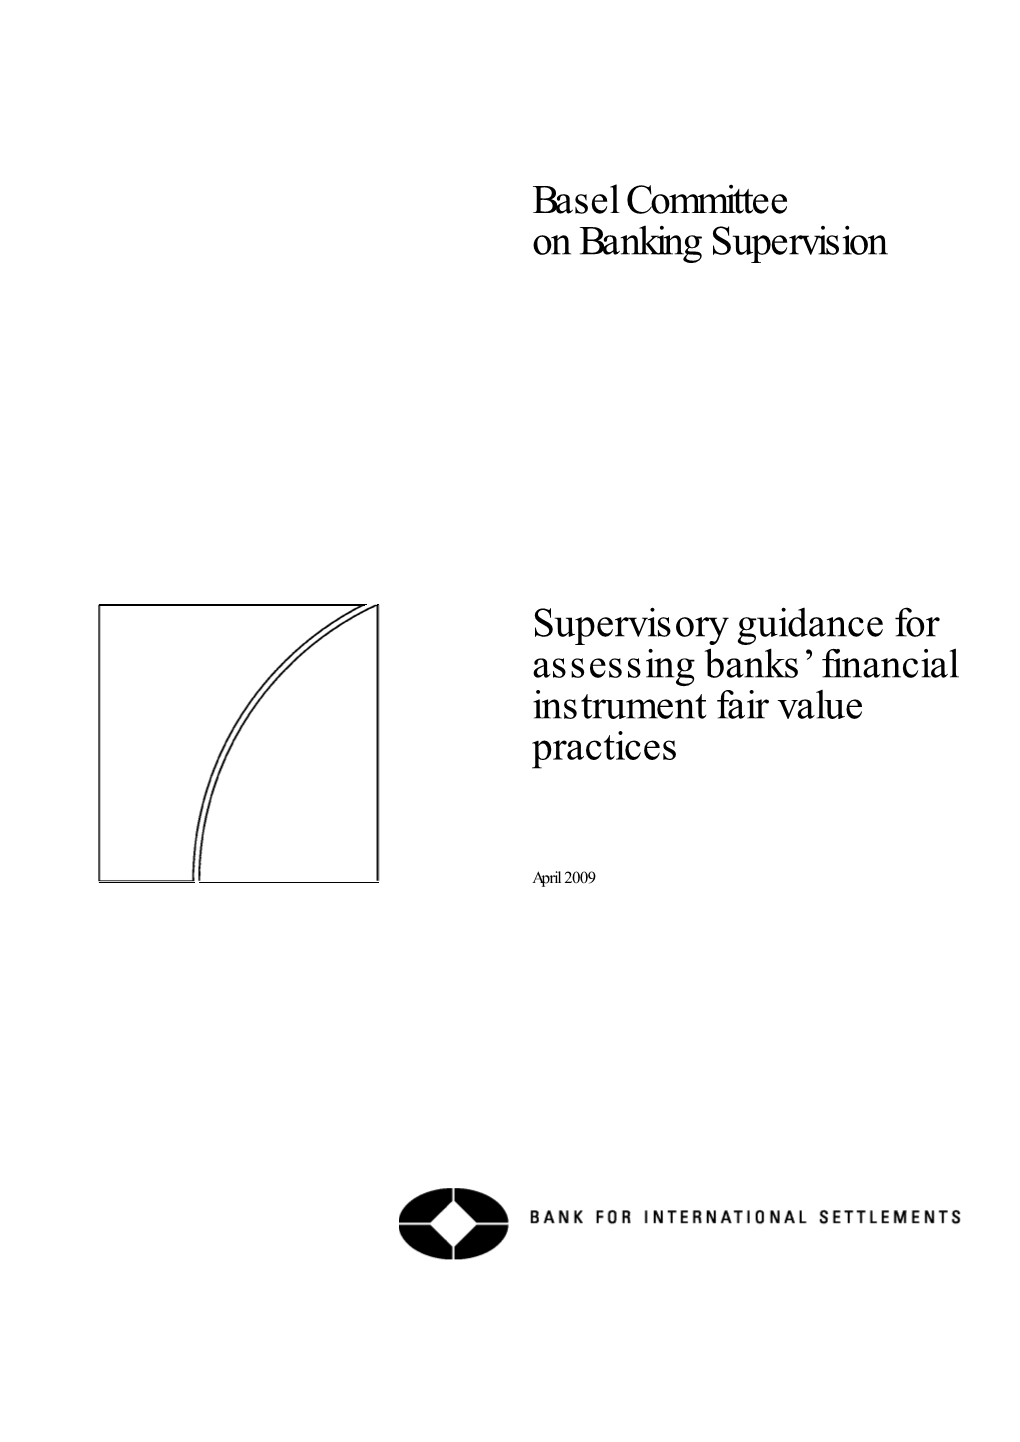 Supervisory Guidance for Assessing Banks' Financial Instrument Fair